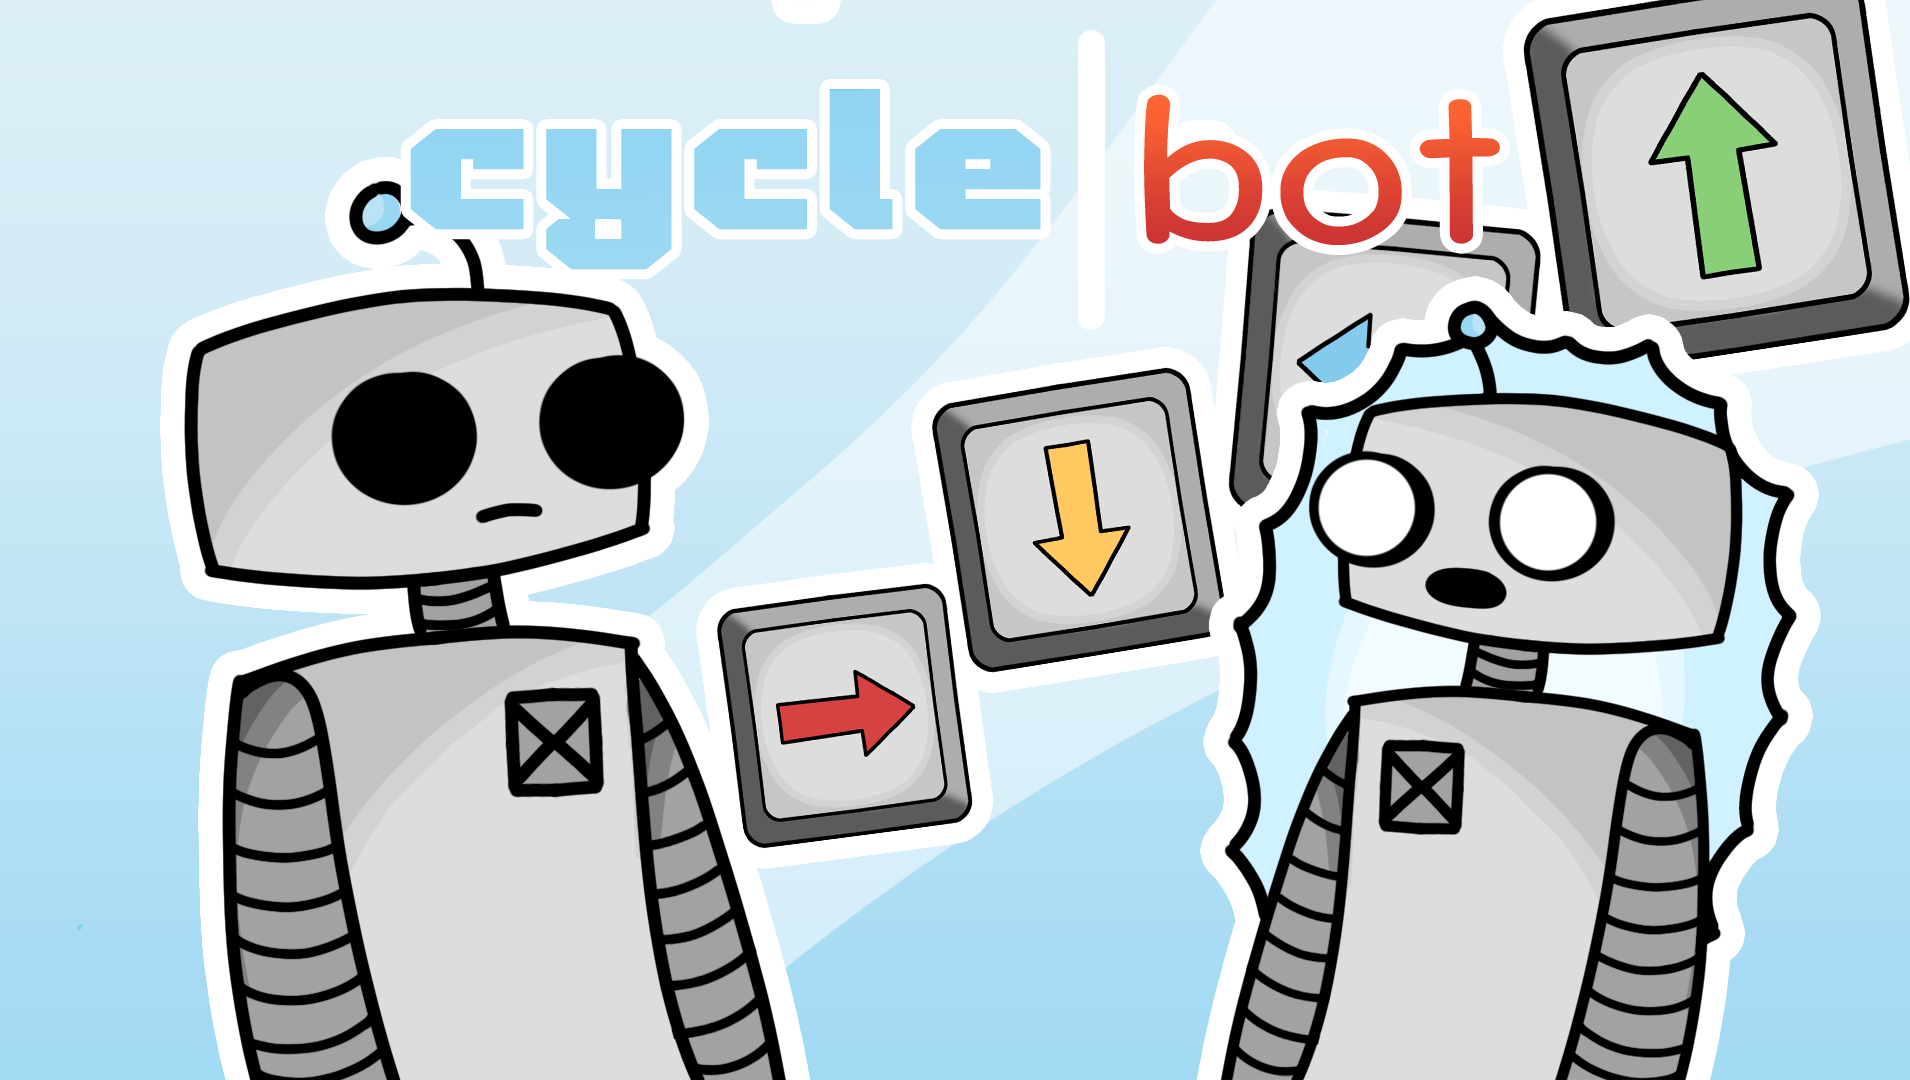 cycle | bot